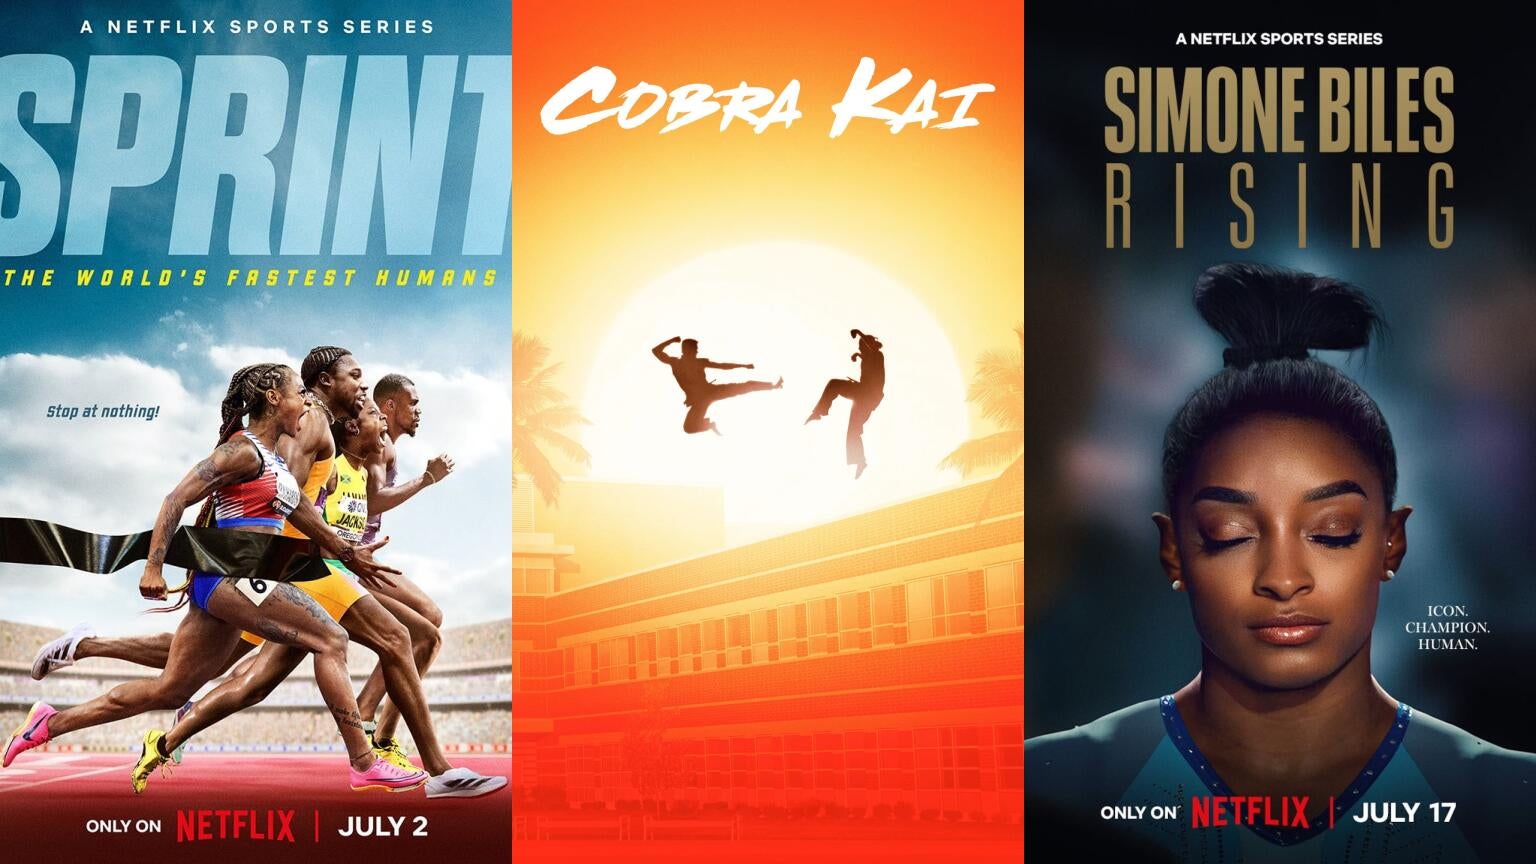 Posters for Netflix's "SPRINT," "Cobra Kai," and "Simone Biles Rising"